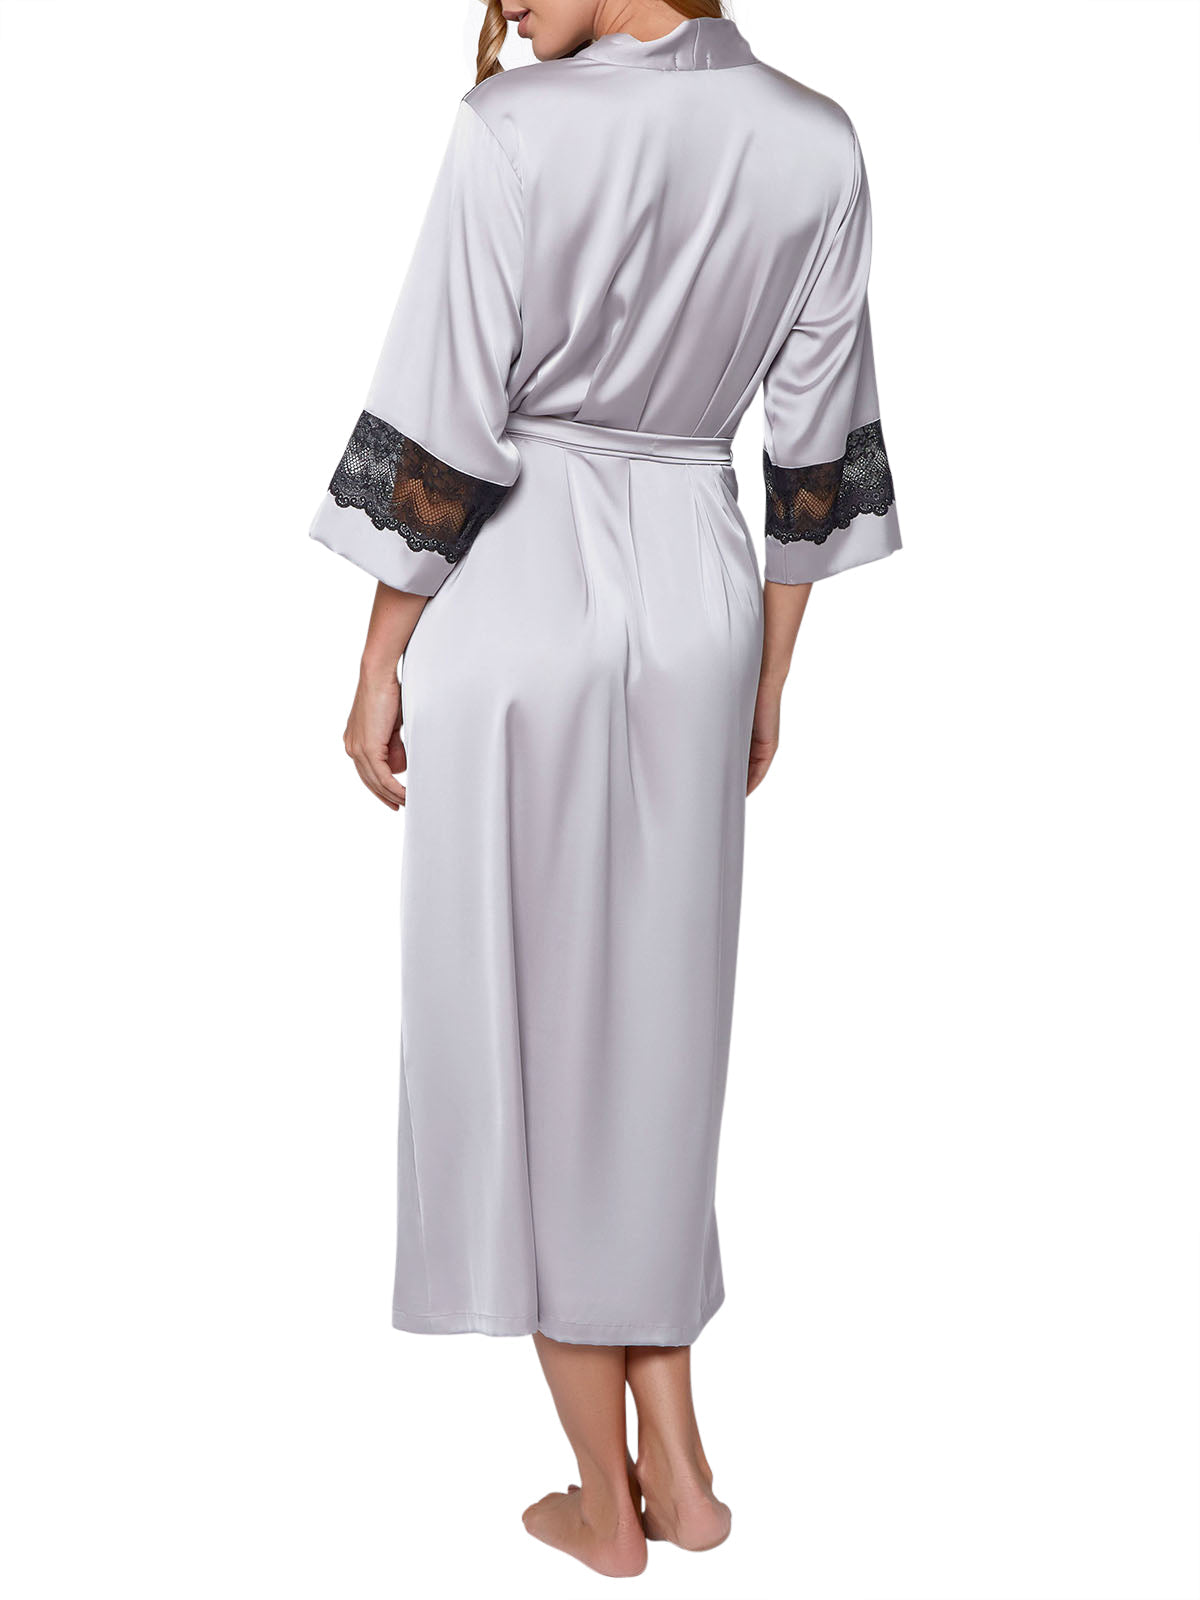 iCollection Robe Women's Tess Long Robe Loungewear